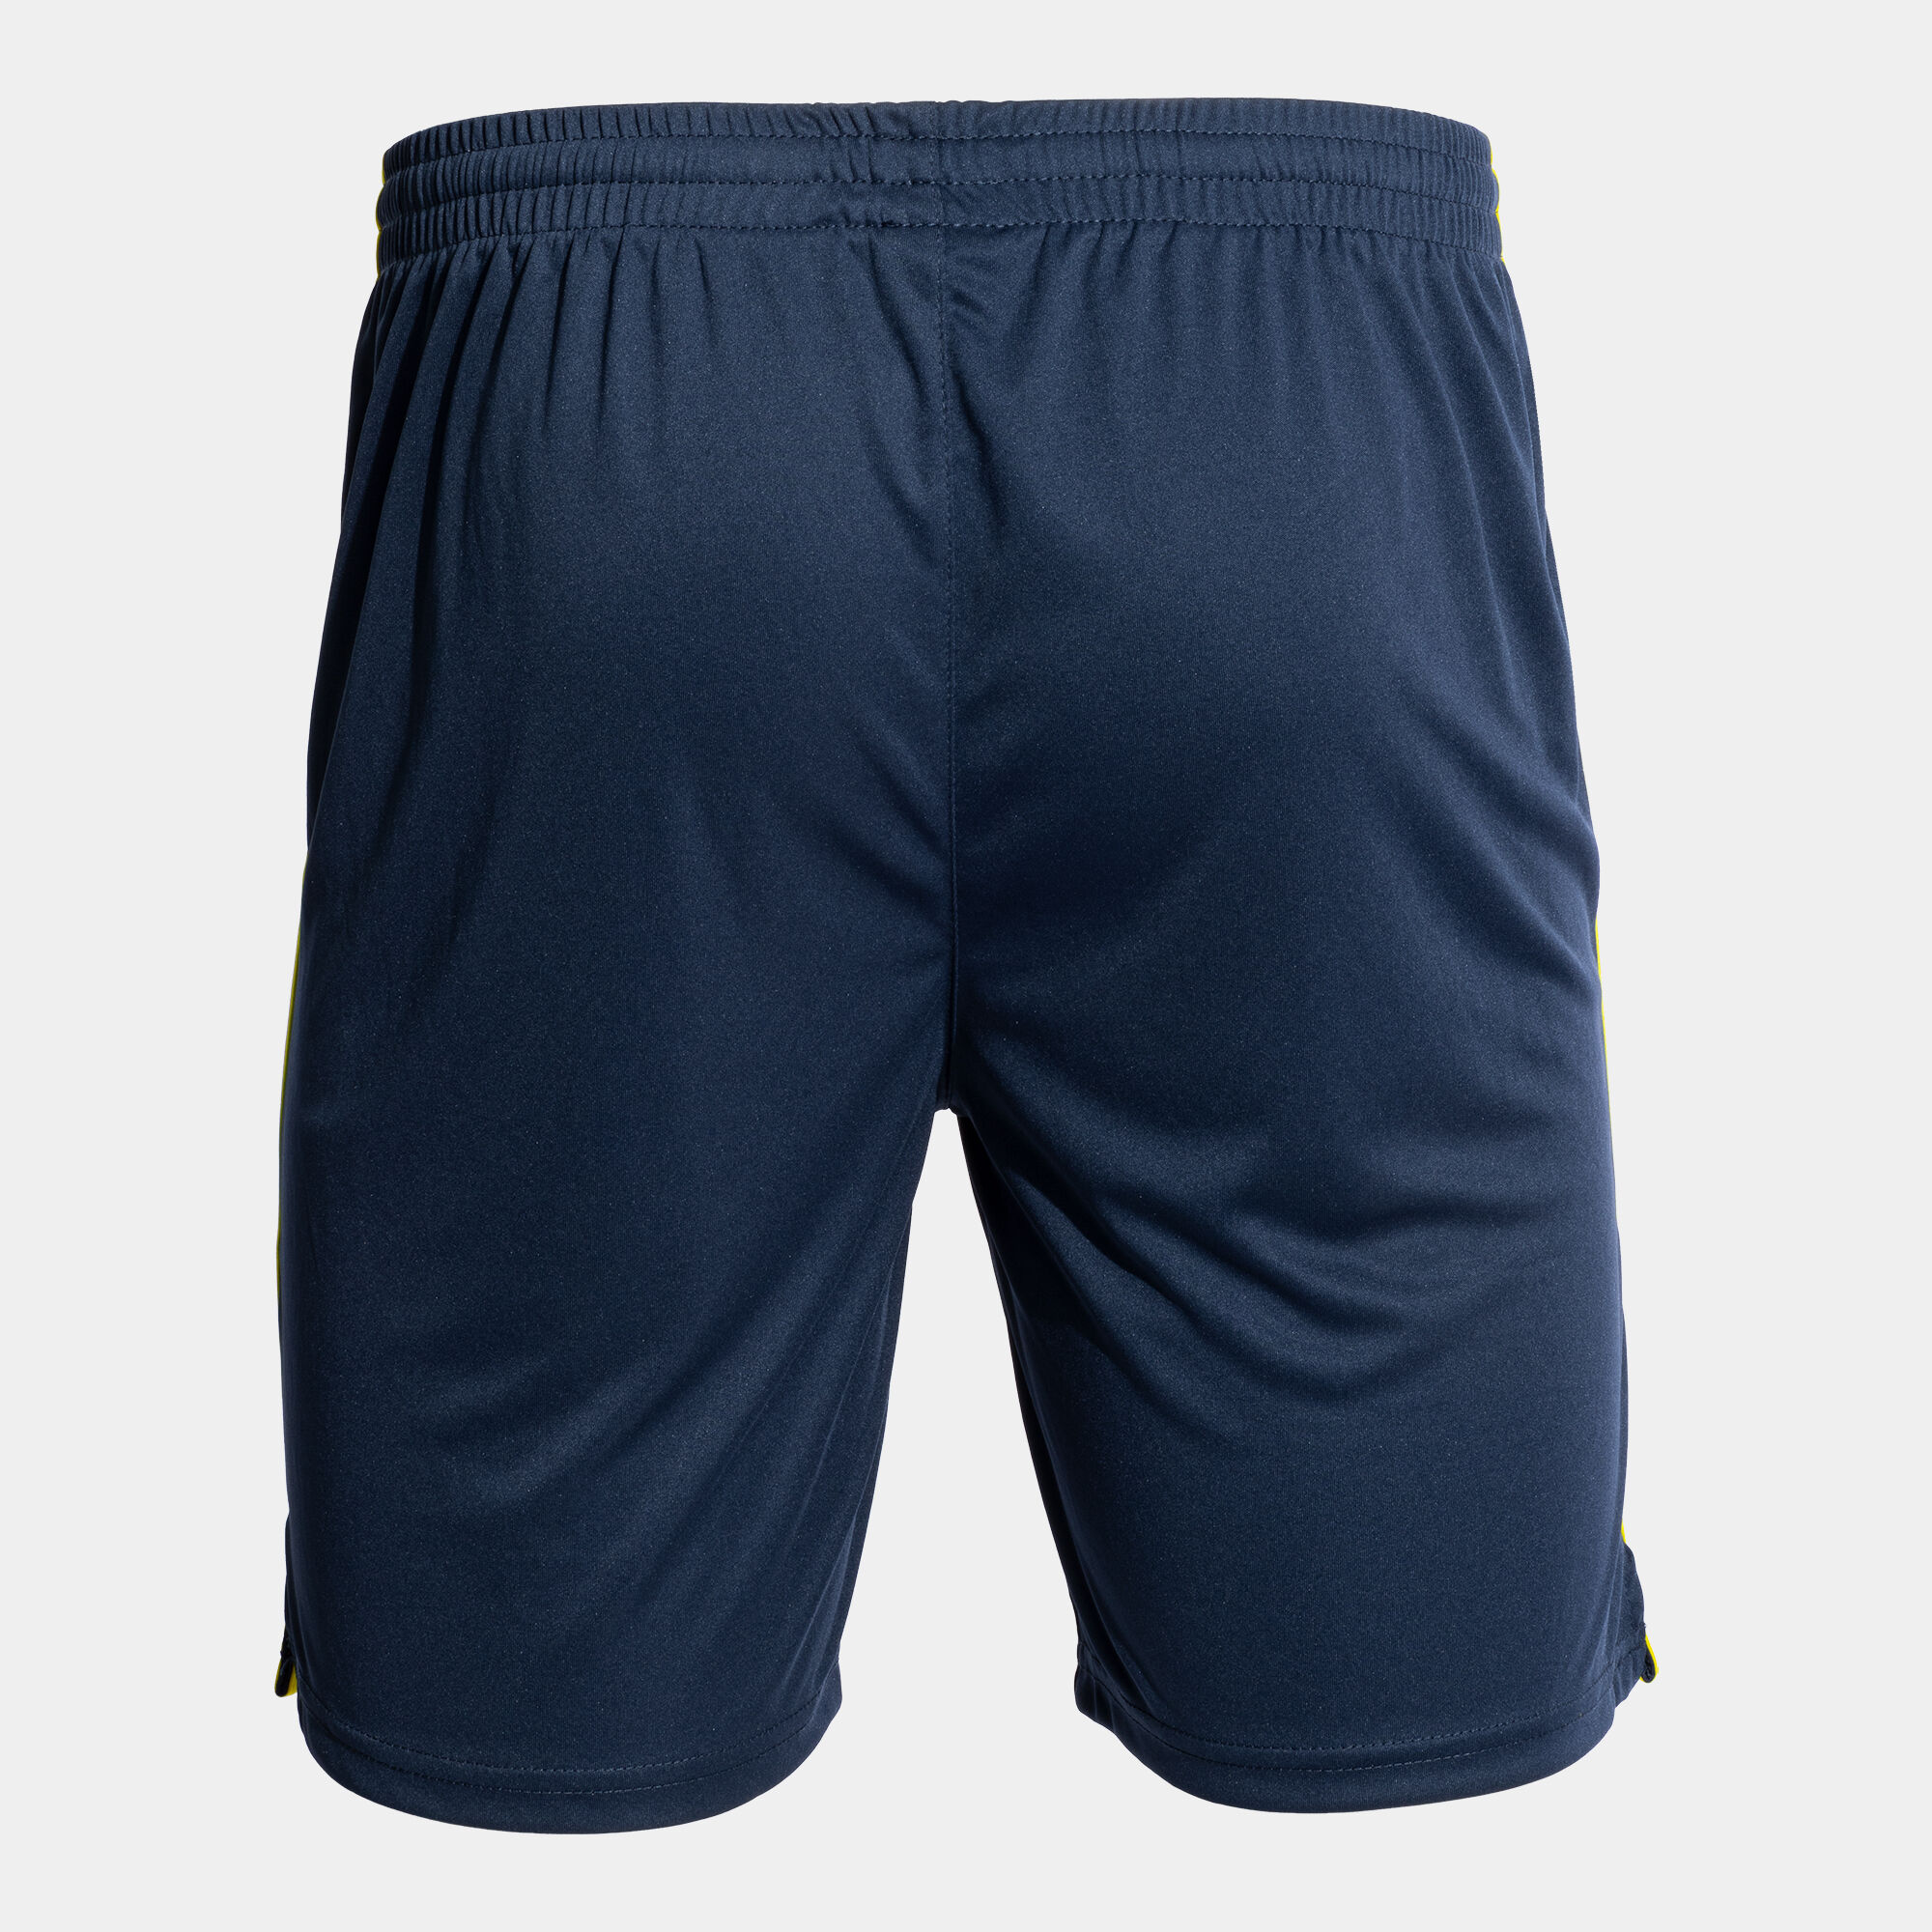 Bermuda shorts man Open III navy blue yellow